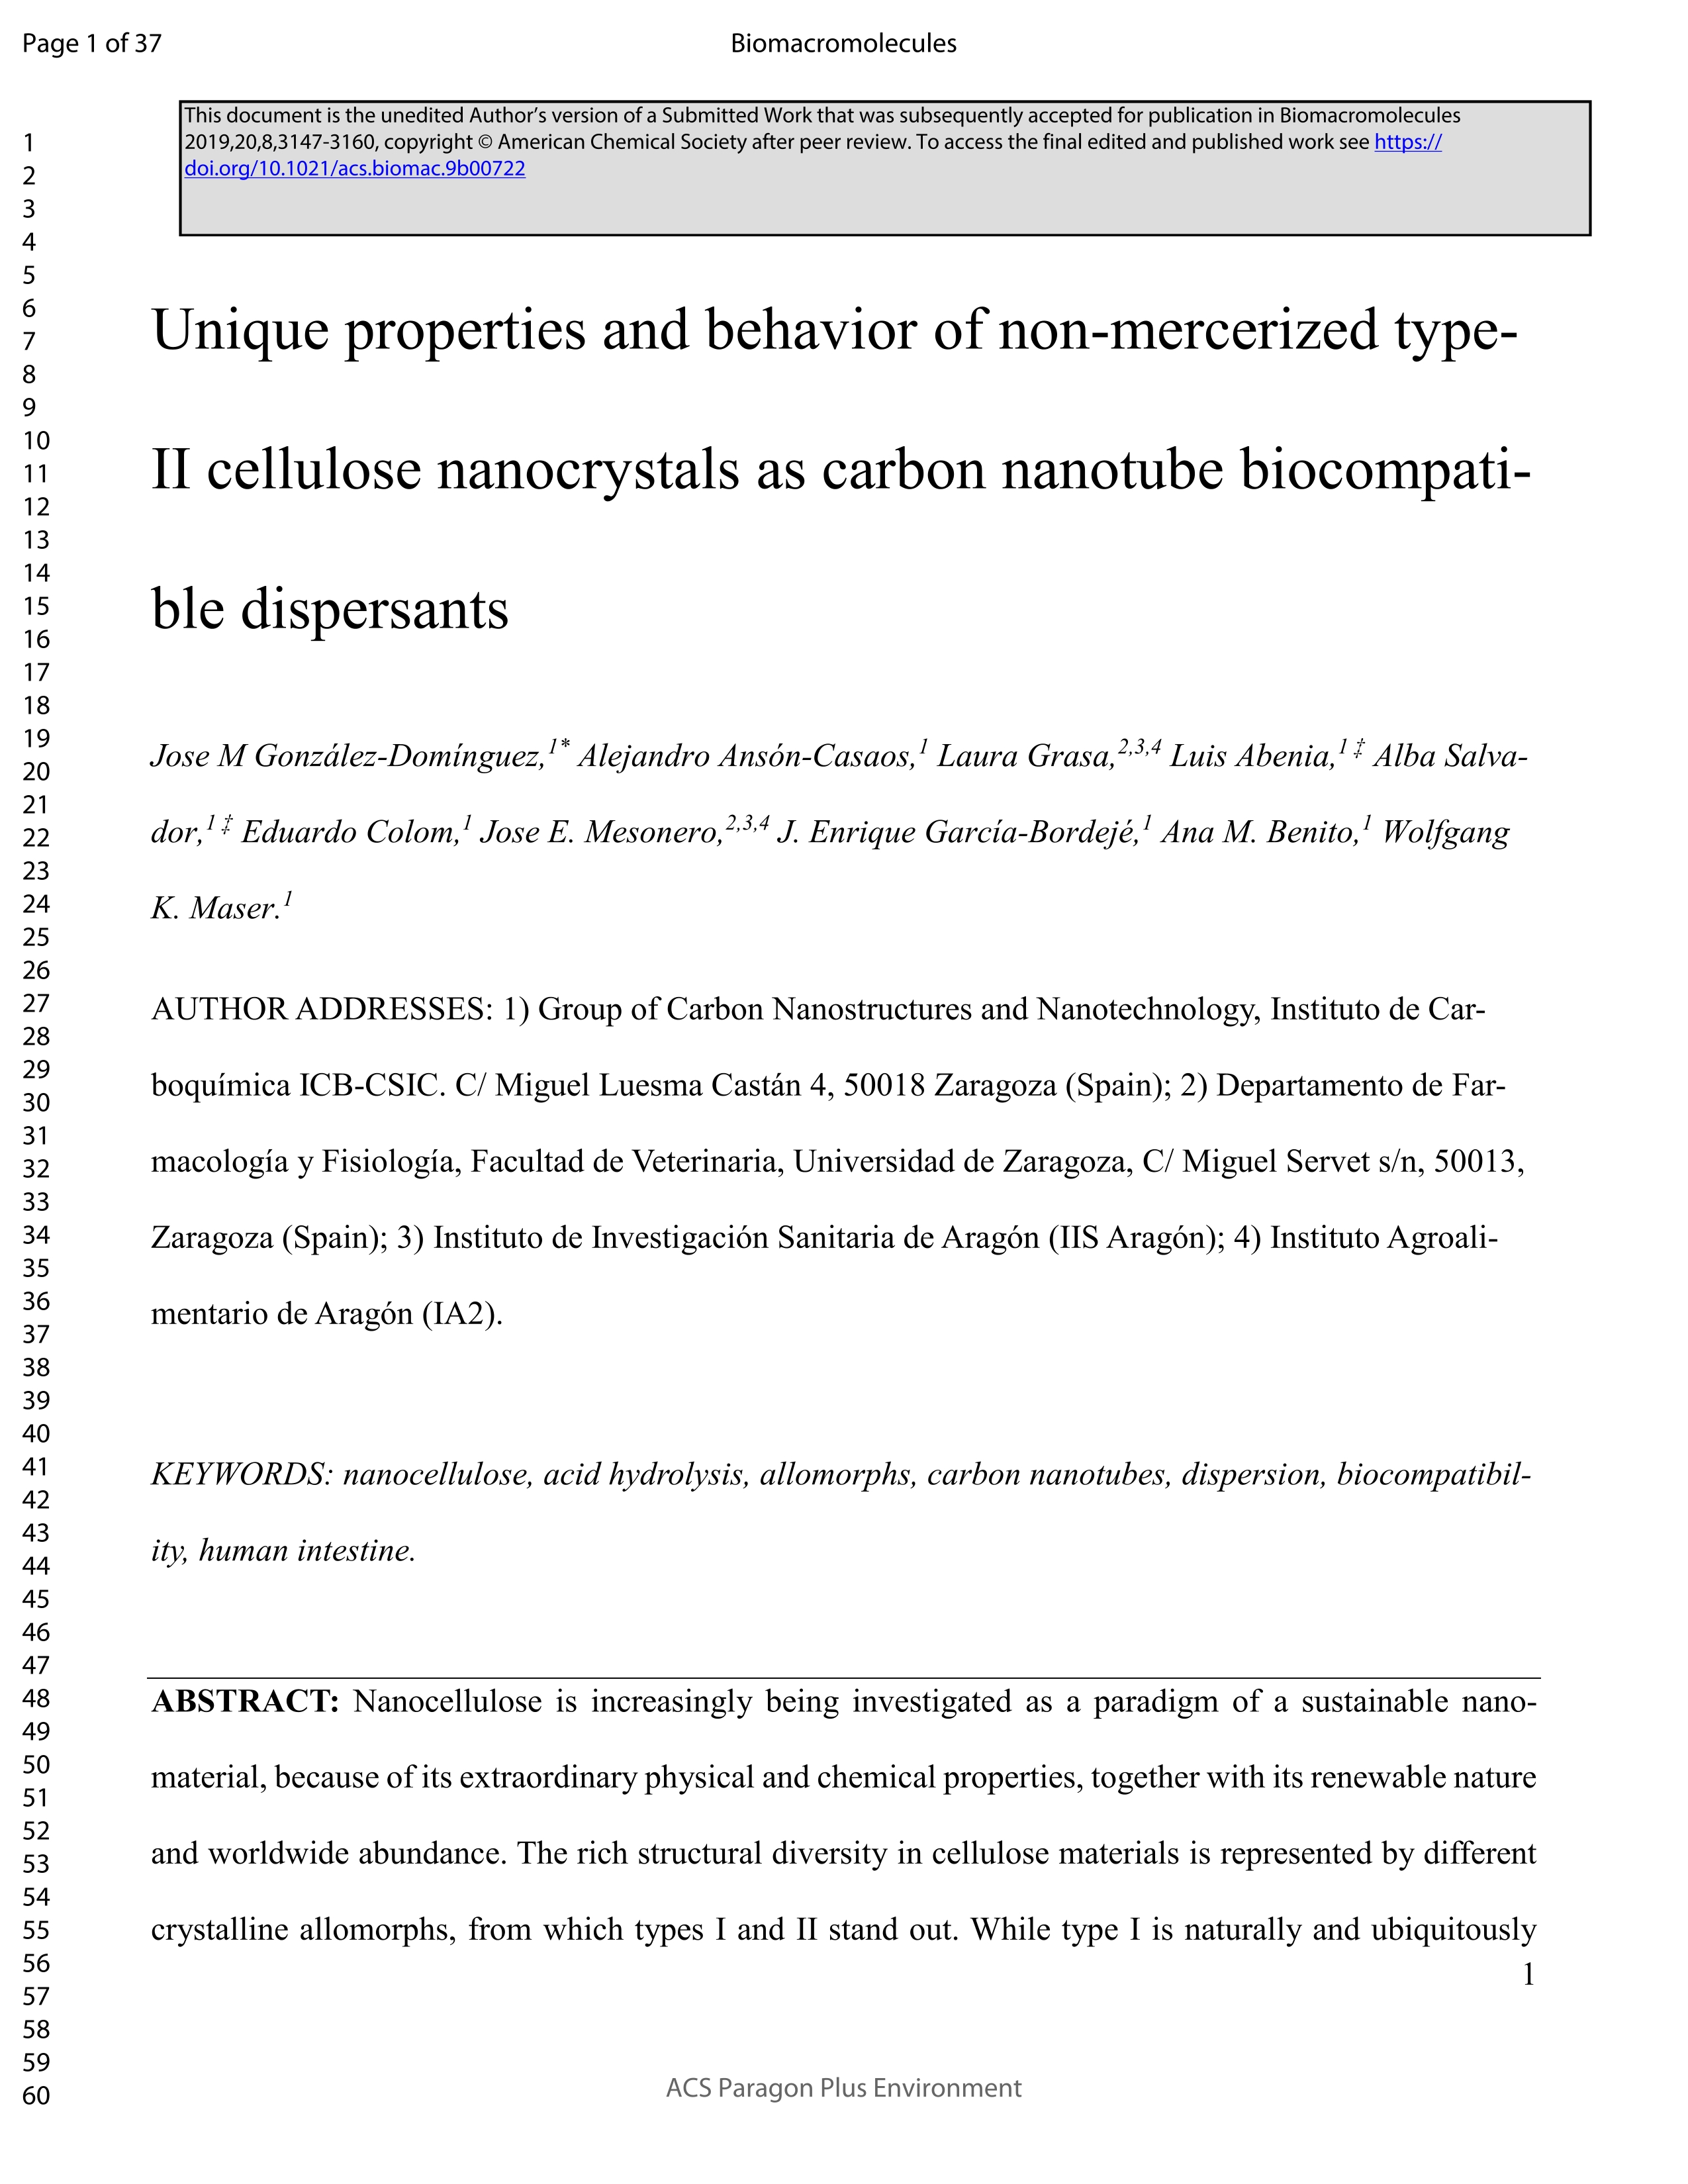 Unique properties and behavior of nonmercerized type-ii cellulose nanocrystals as carbon nanotube biocompatible dispersants